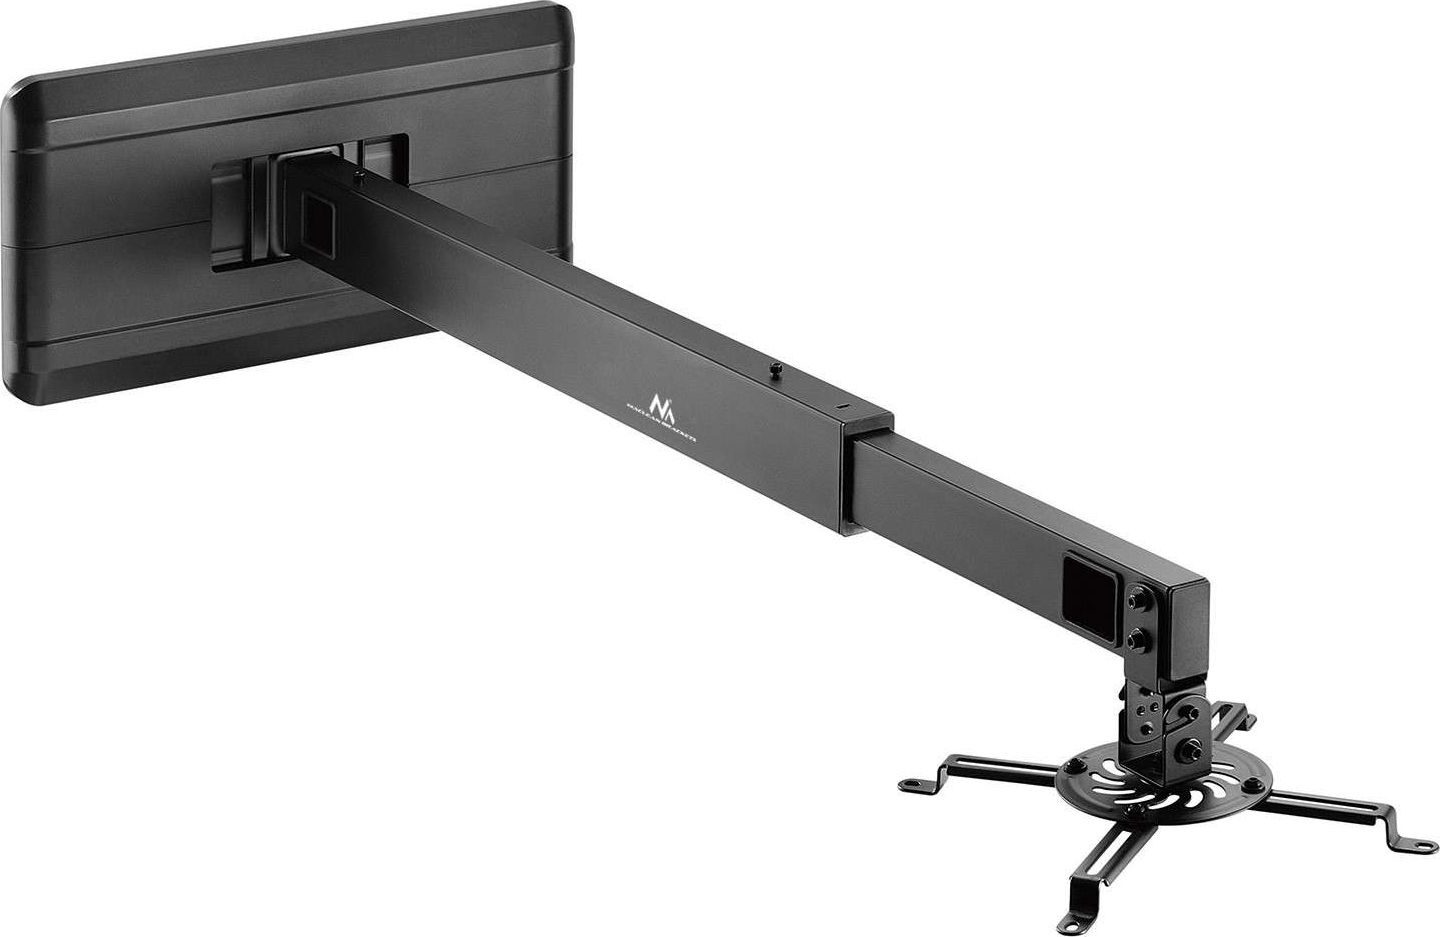 Maclean short throw projector wall mount, max 15kg, MC-945 projektora aksesuārs